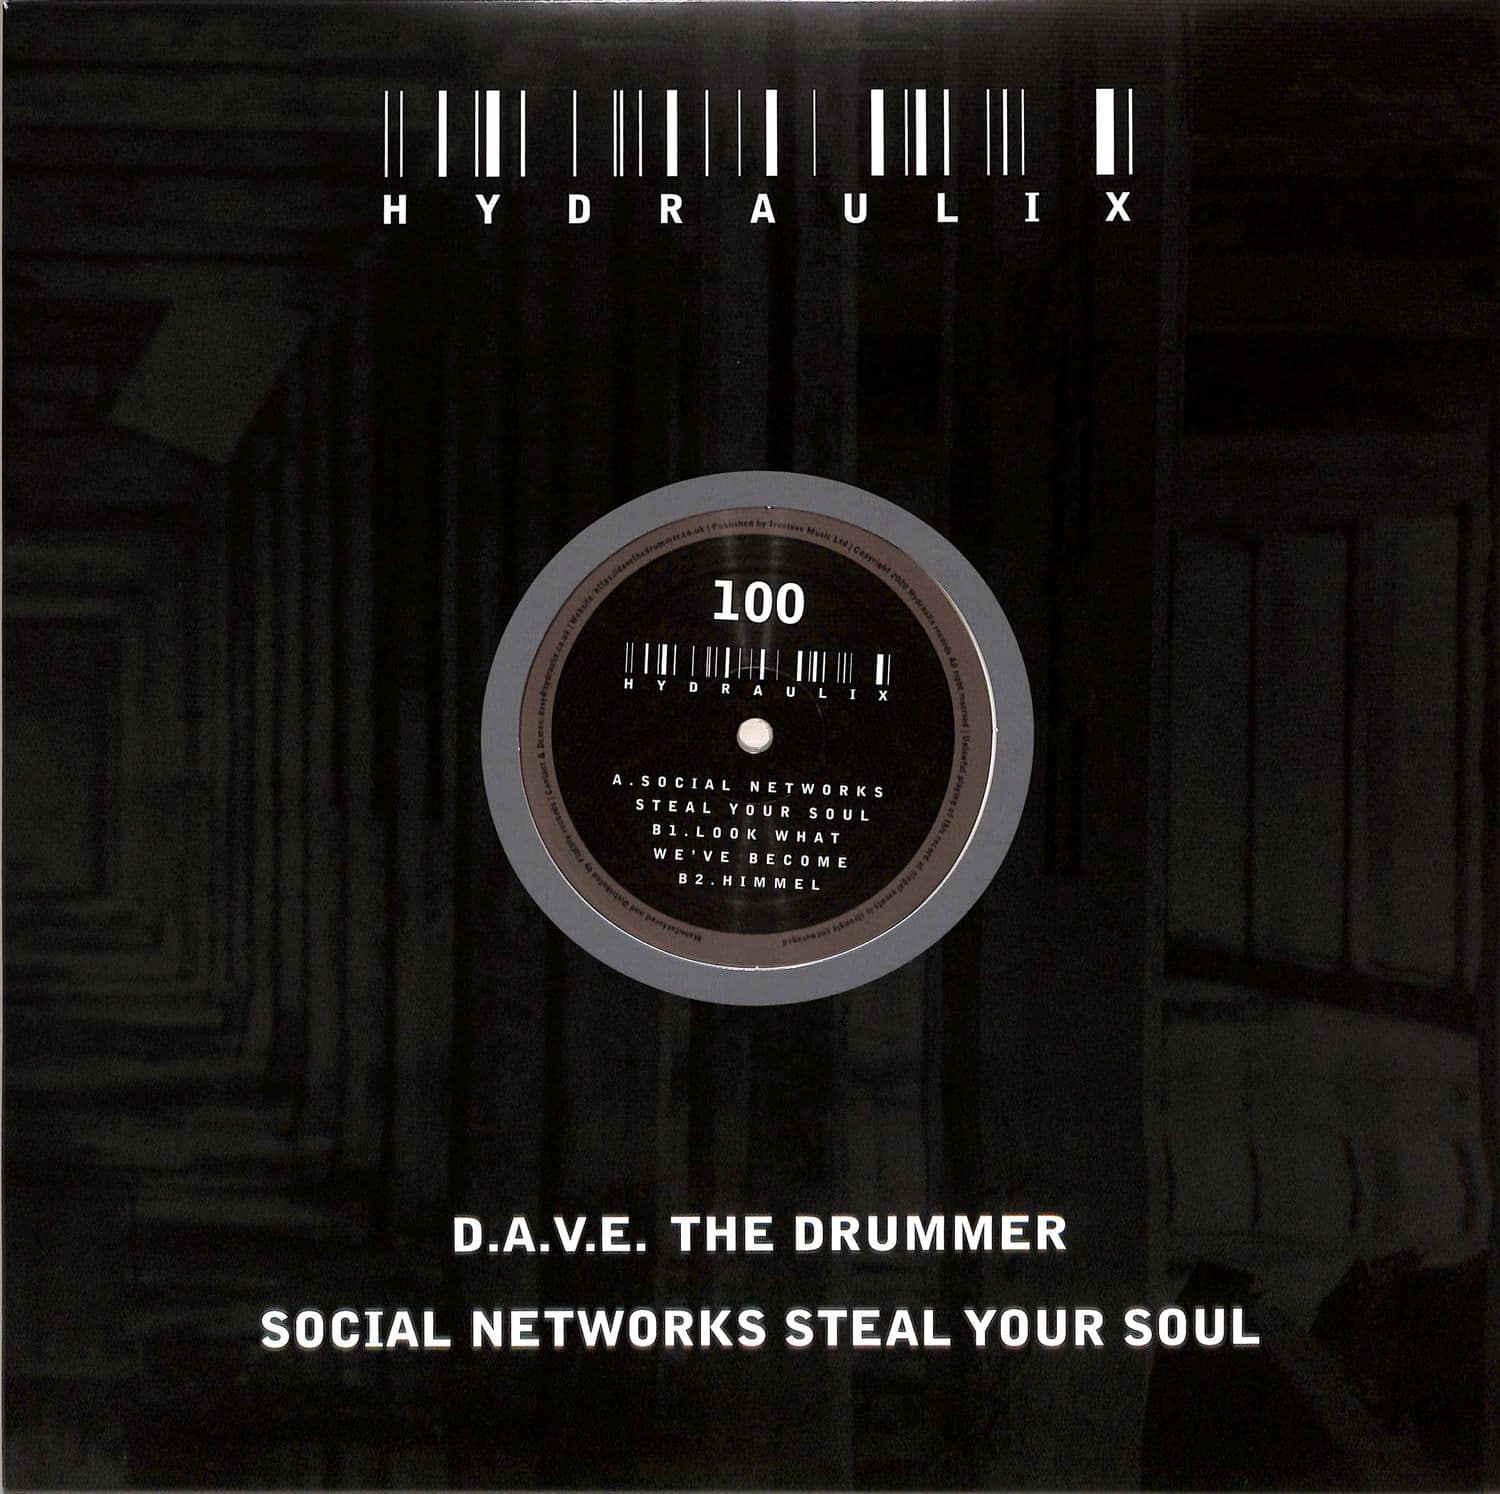 D.A.V.E. The Drummer - SOCIAL NETWORKS STEAL YOUR SOUL 